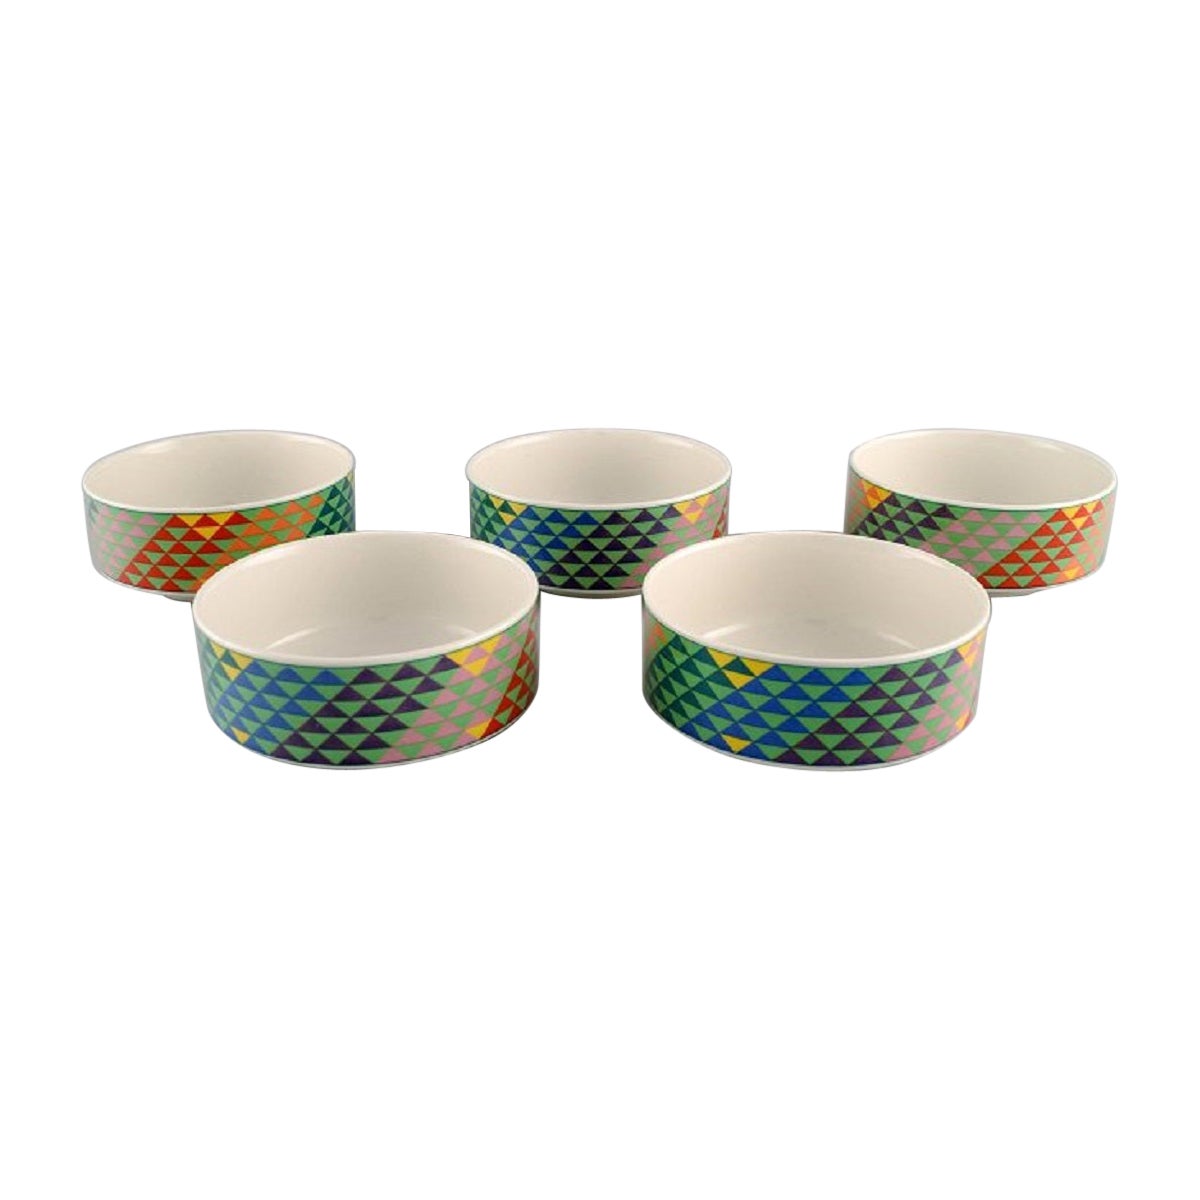 Gallo Design, Germany, Five Pamplona Porcelain Bowls, Colorful Decoration